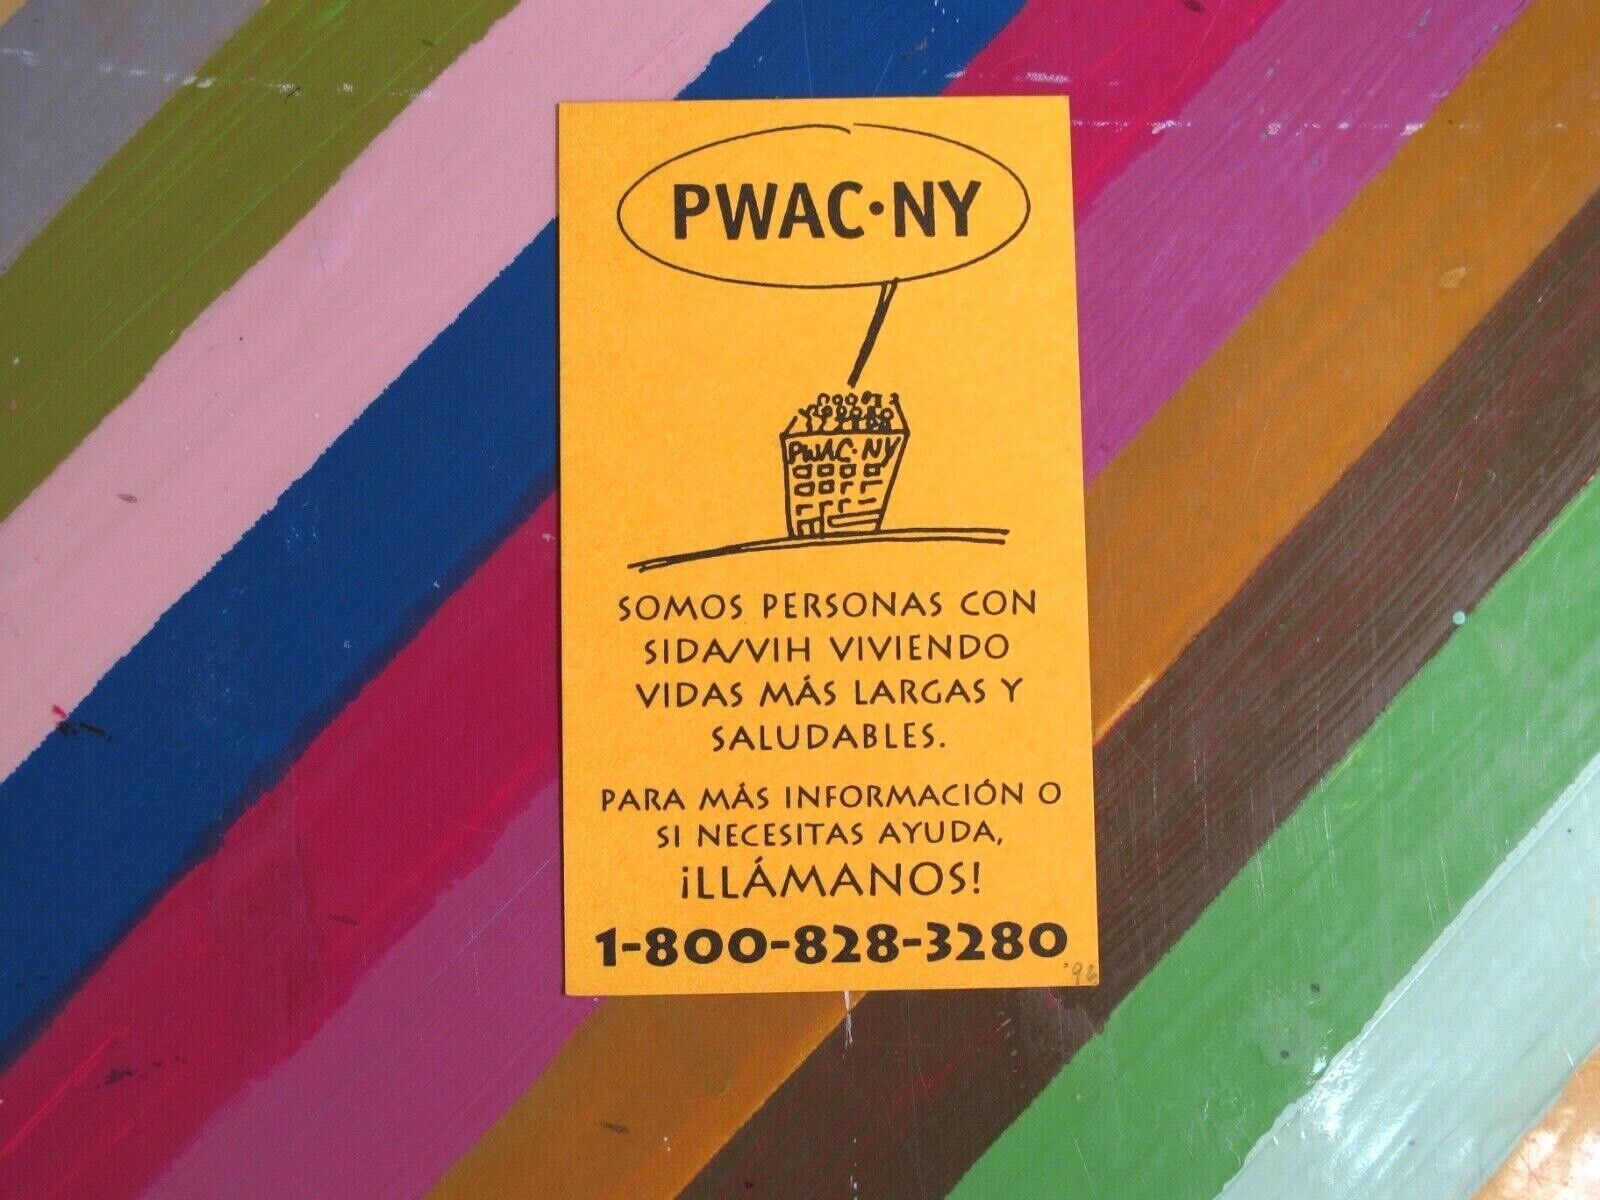 vtg gay lesbian ephemera - PWAC NY healthier lives card yellow